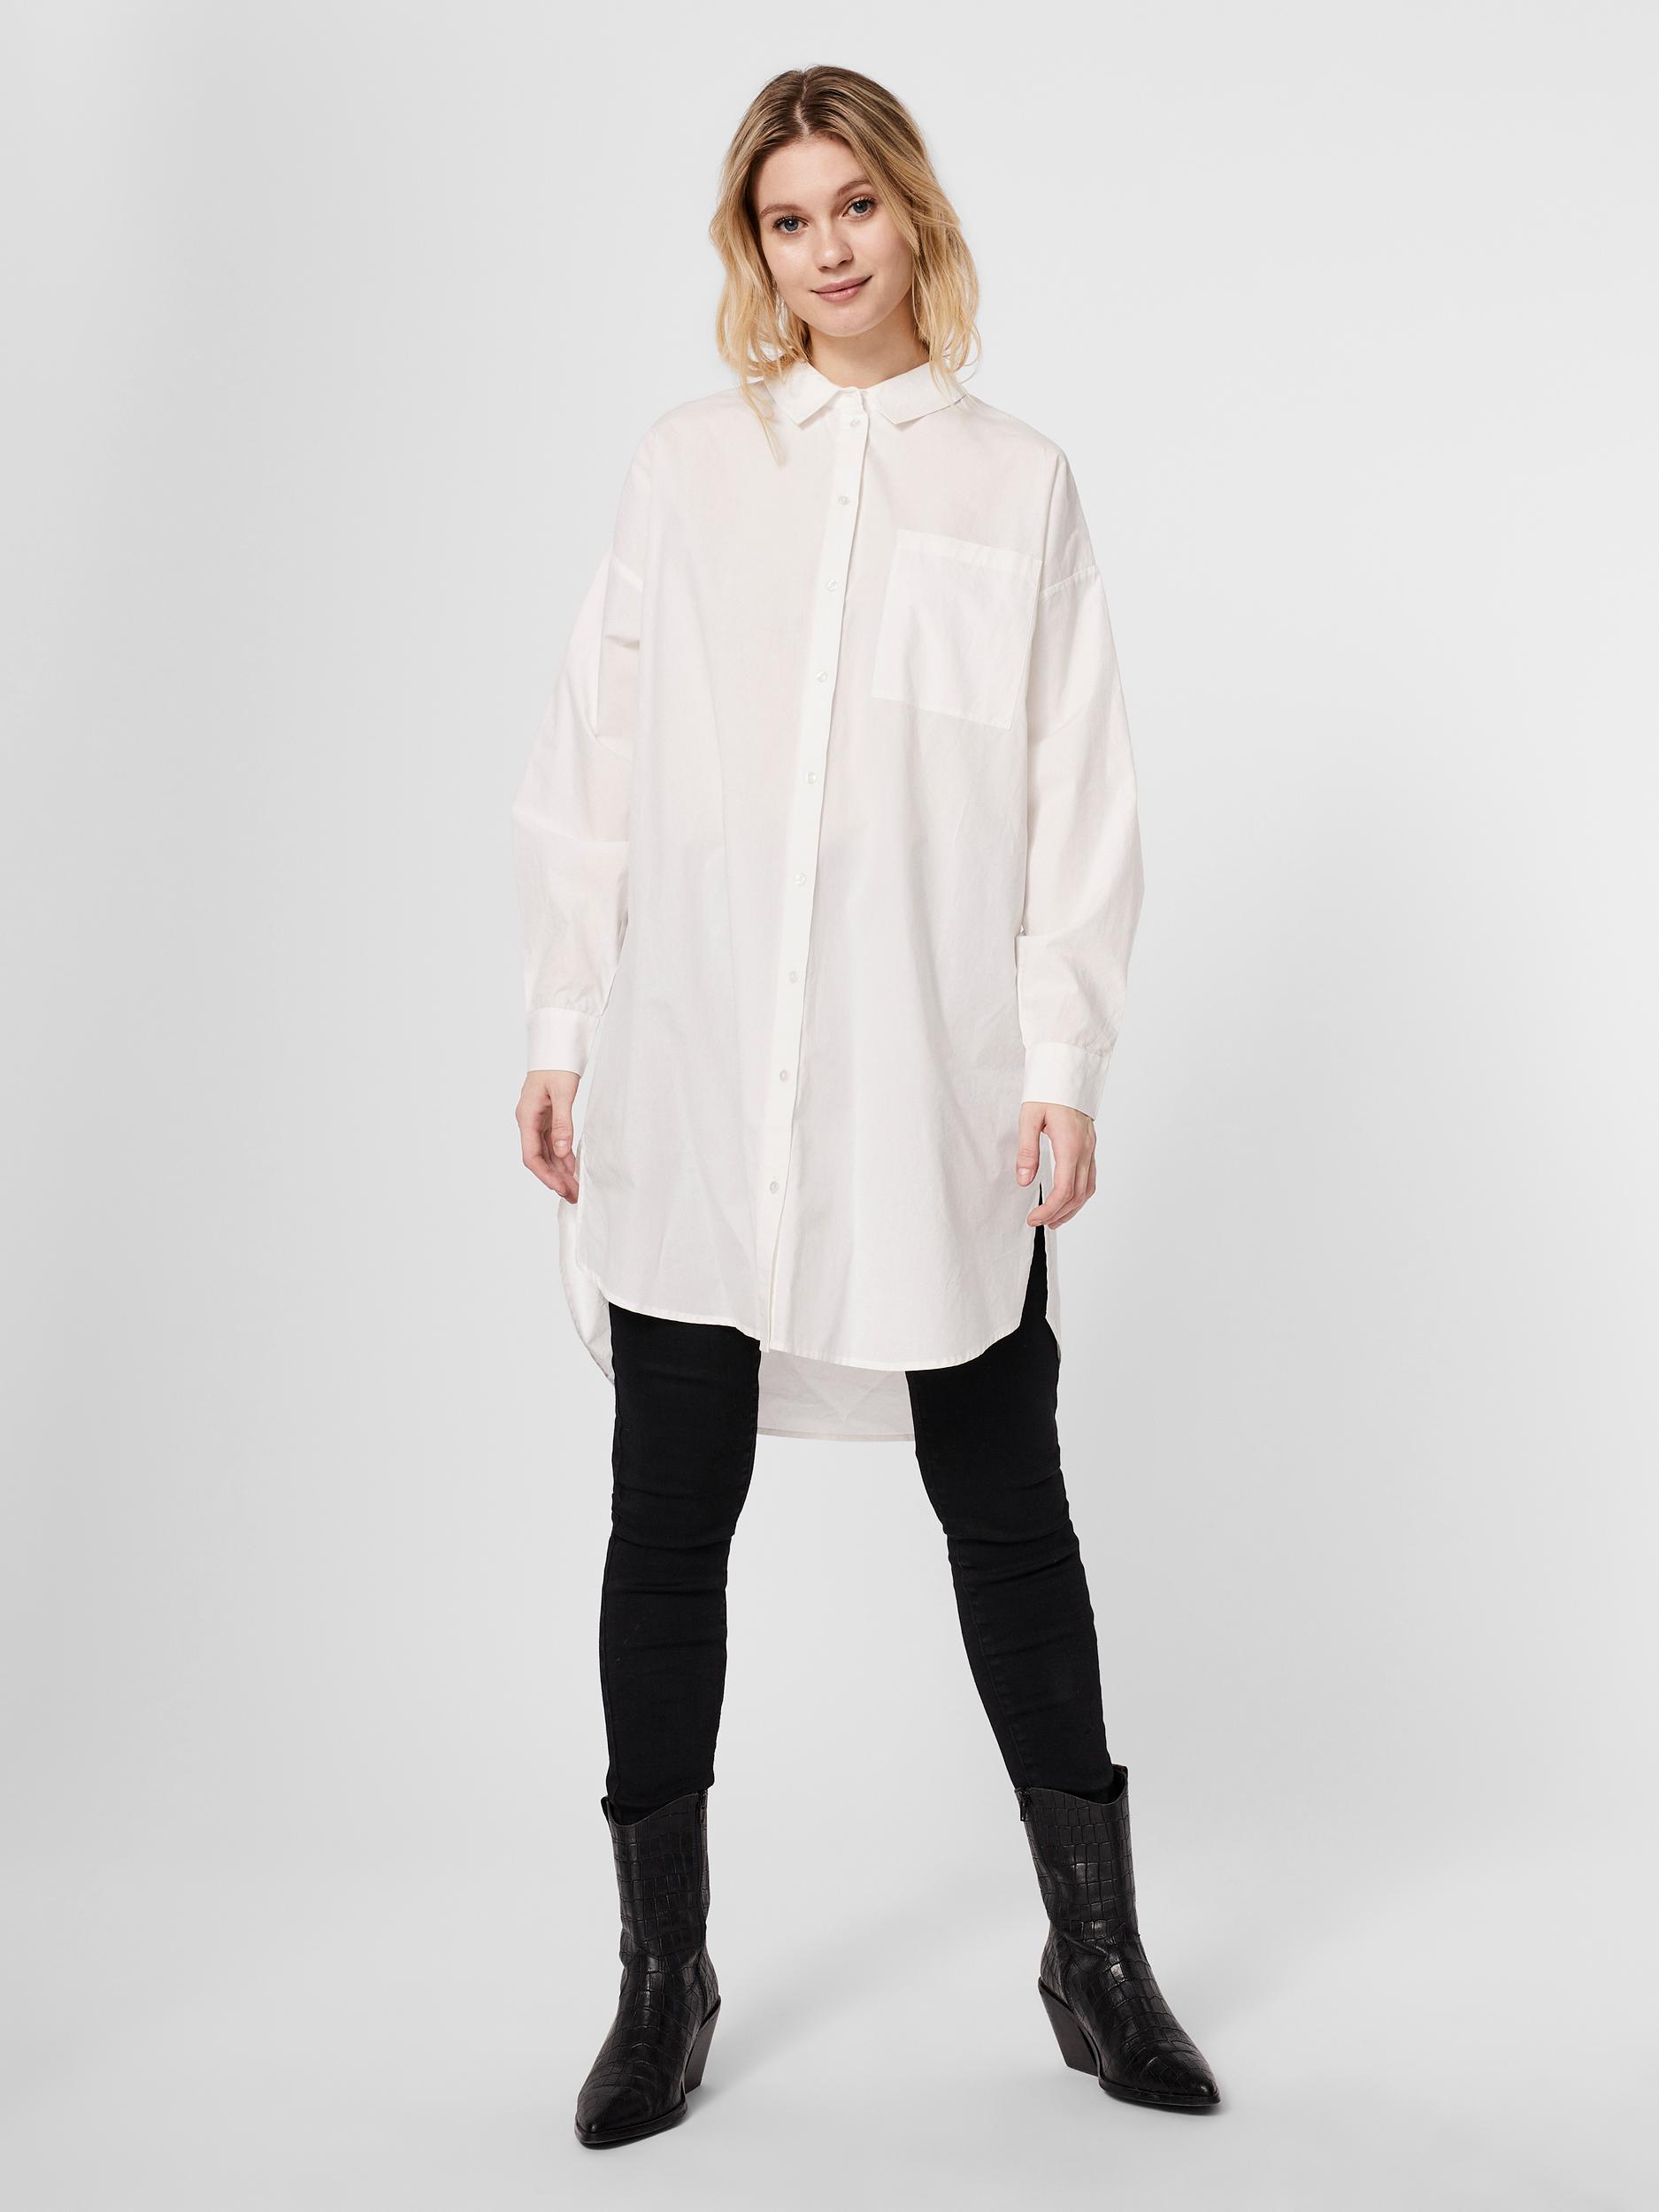 AWARE | Percey oversized shirt, SNOW WHITE, large